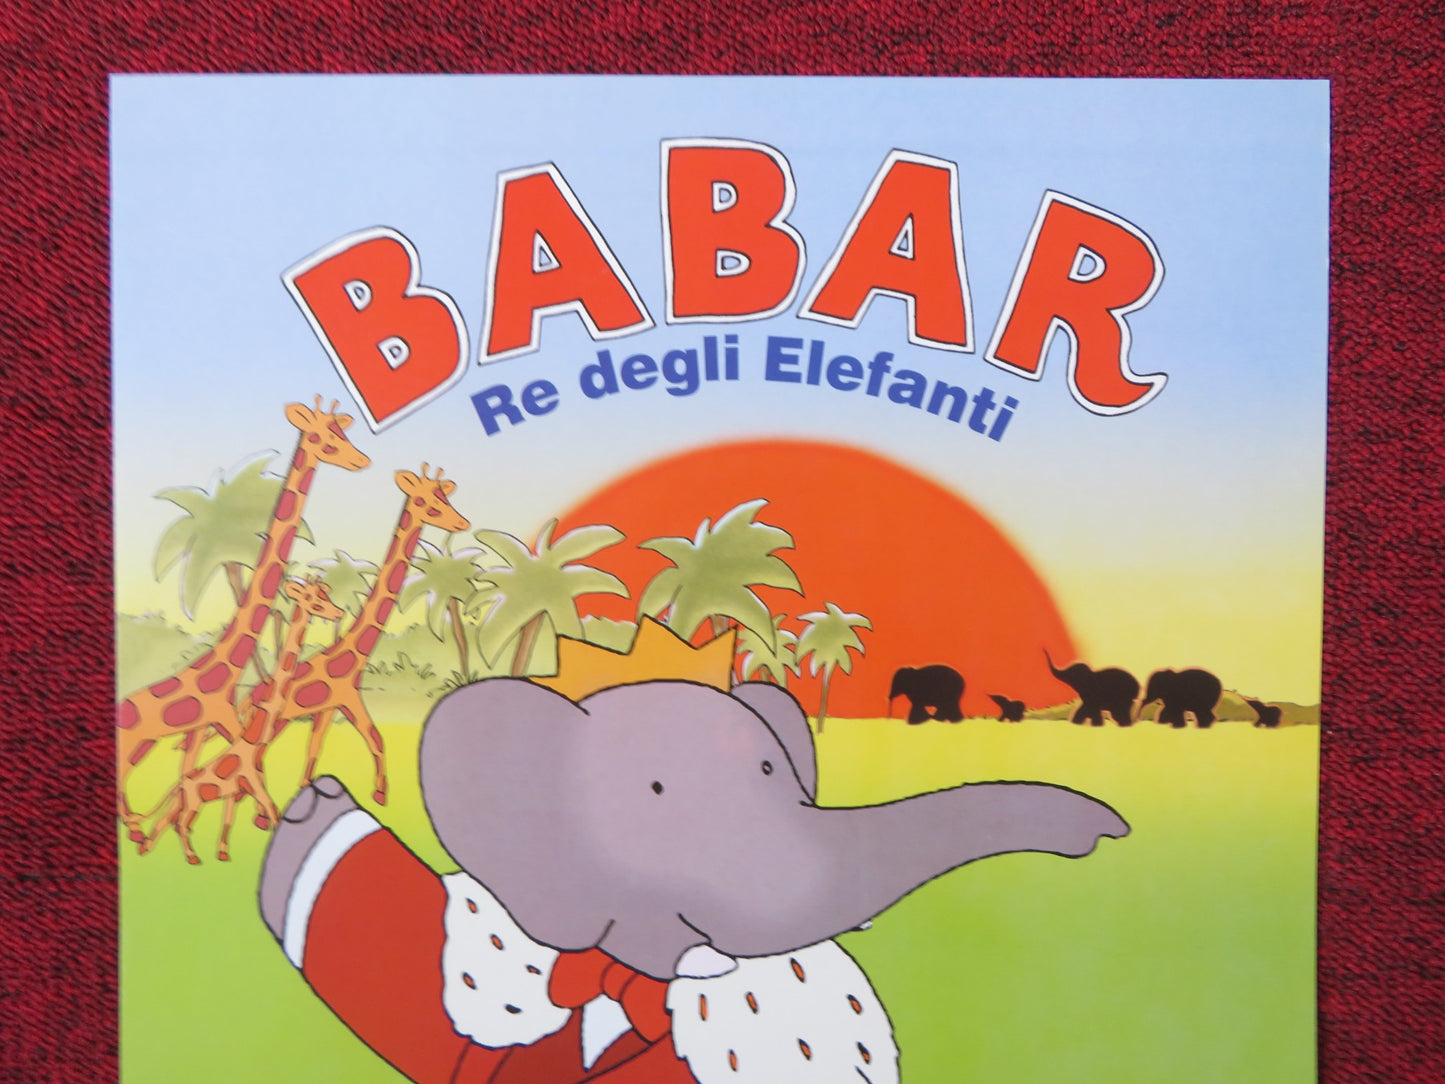 BABAR: KING OF THE ELEPHANTS ITALIAN LOCANDINA POSTER PHILIP WILLIAMS 2014